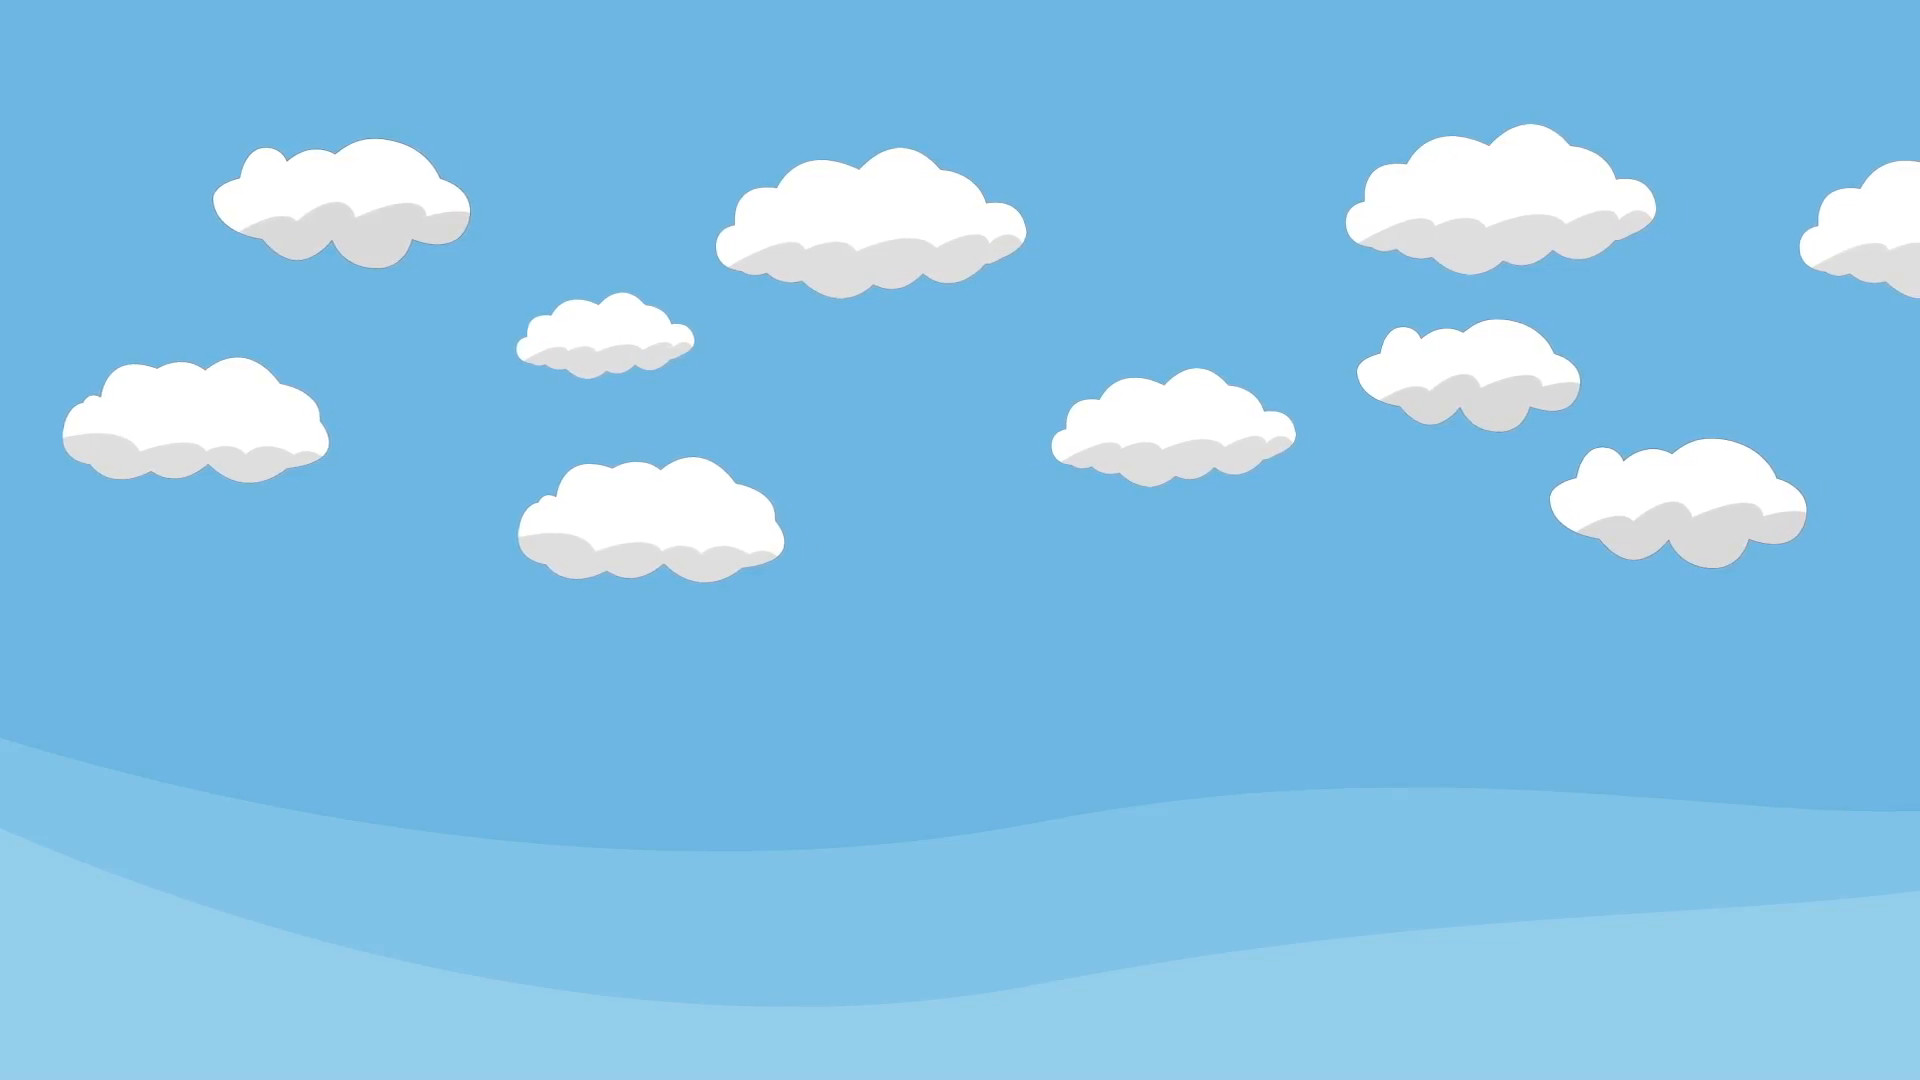 Cloud Pattern Blue Wallpaper Design. Seamless Cloud Pattern